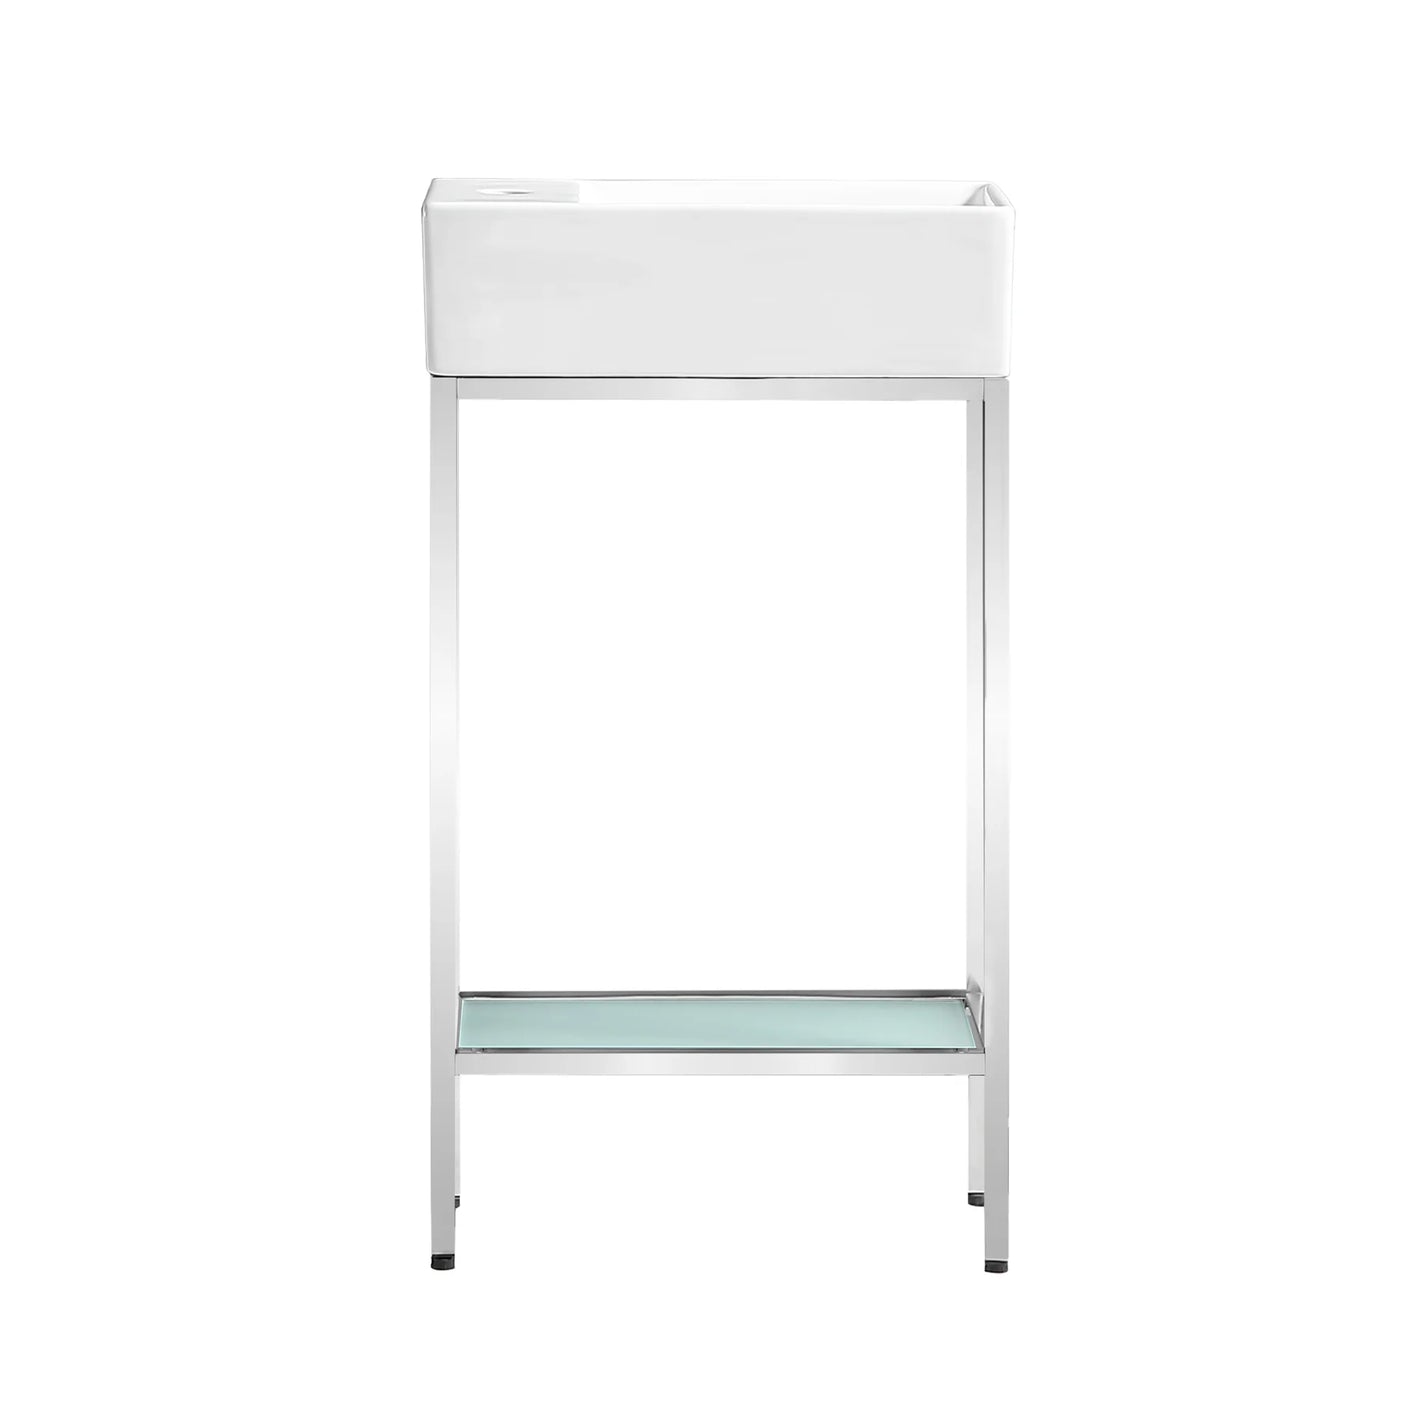 Pierre 19.5 Single, Freestanding, Open Shelf, Chrome Metal Frame Bathroom Vanity